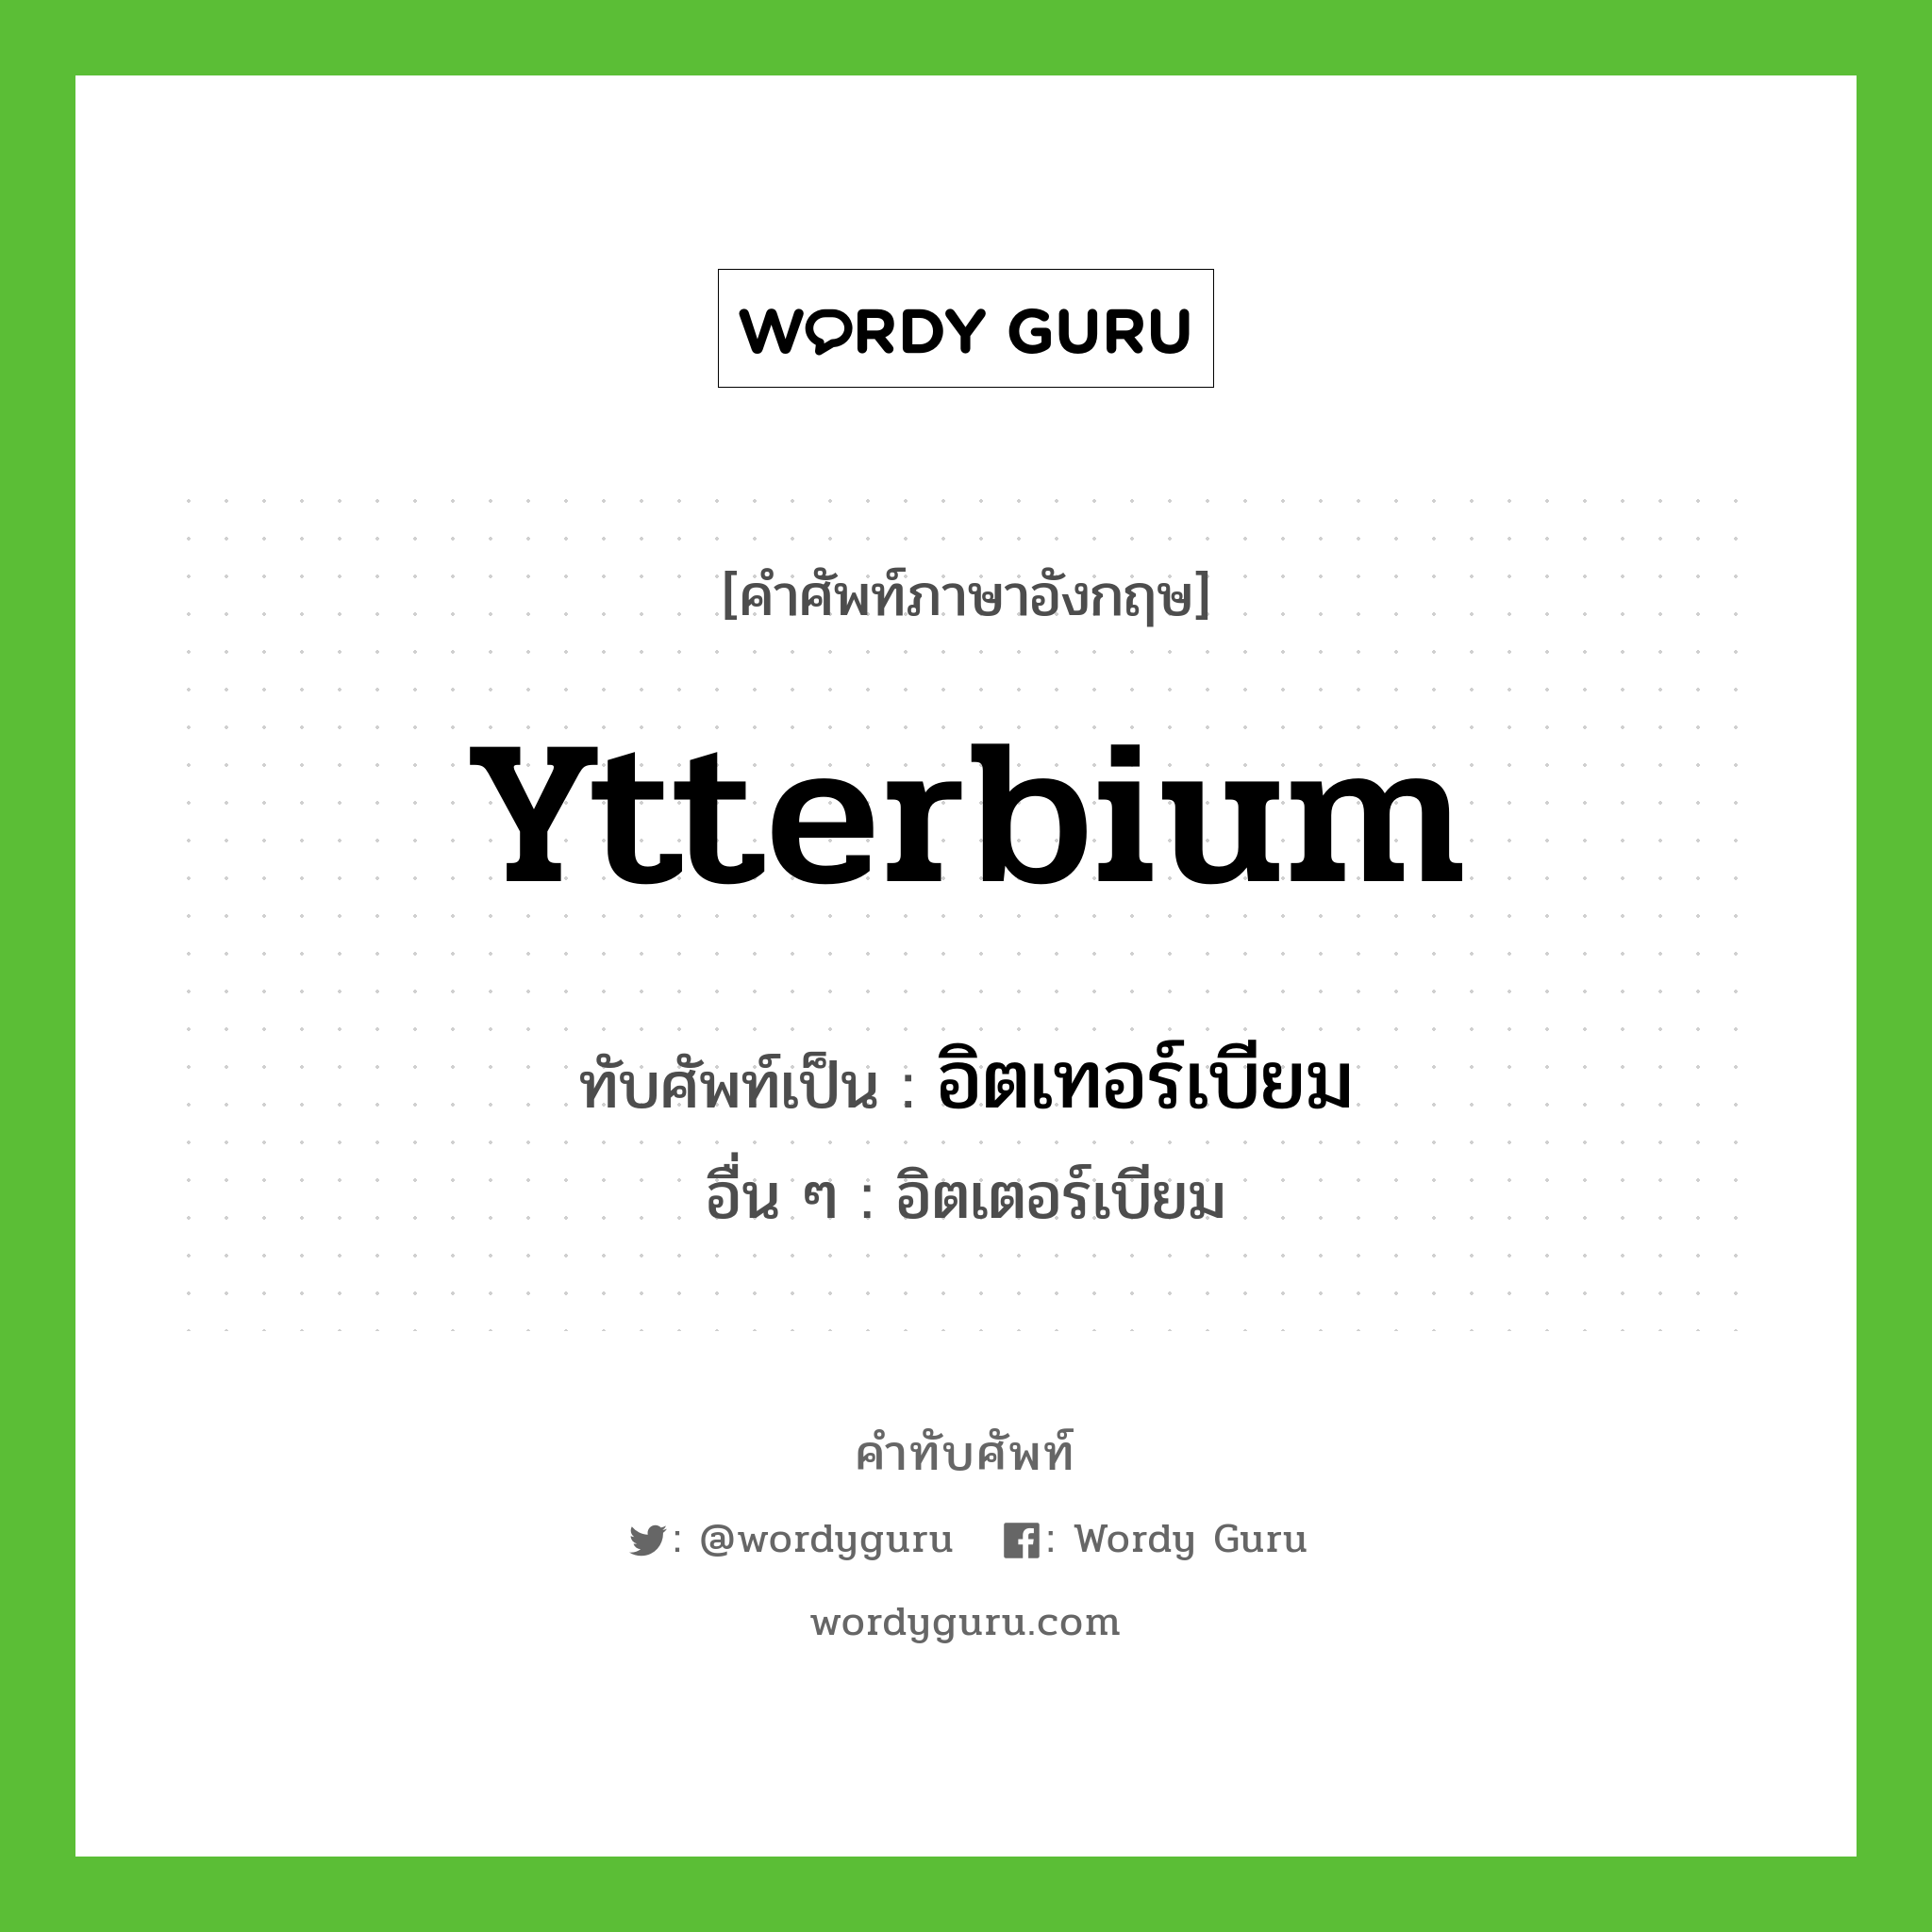 ytterbium เขียนเป็นคำไทยว่าอะไร?, คำศัพท์ภาษาอังกฤษ ytterbium ทับศัพท์เป็น อิตเทอร์เบียม อื่น ๆ อิตเตอร์เบียม